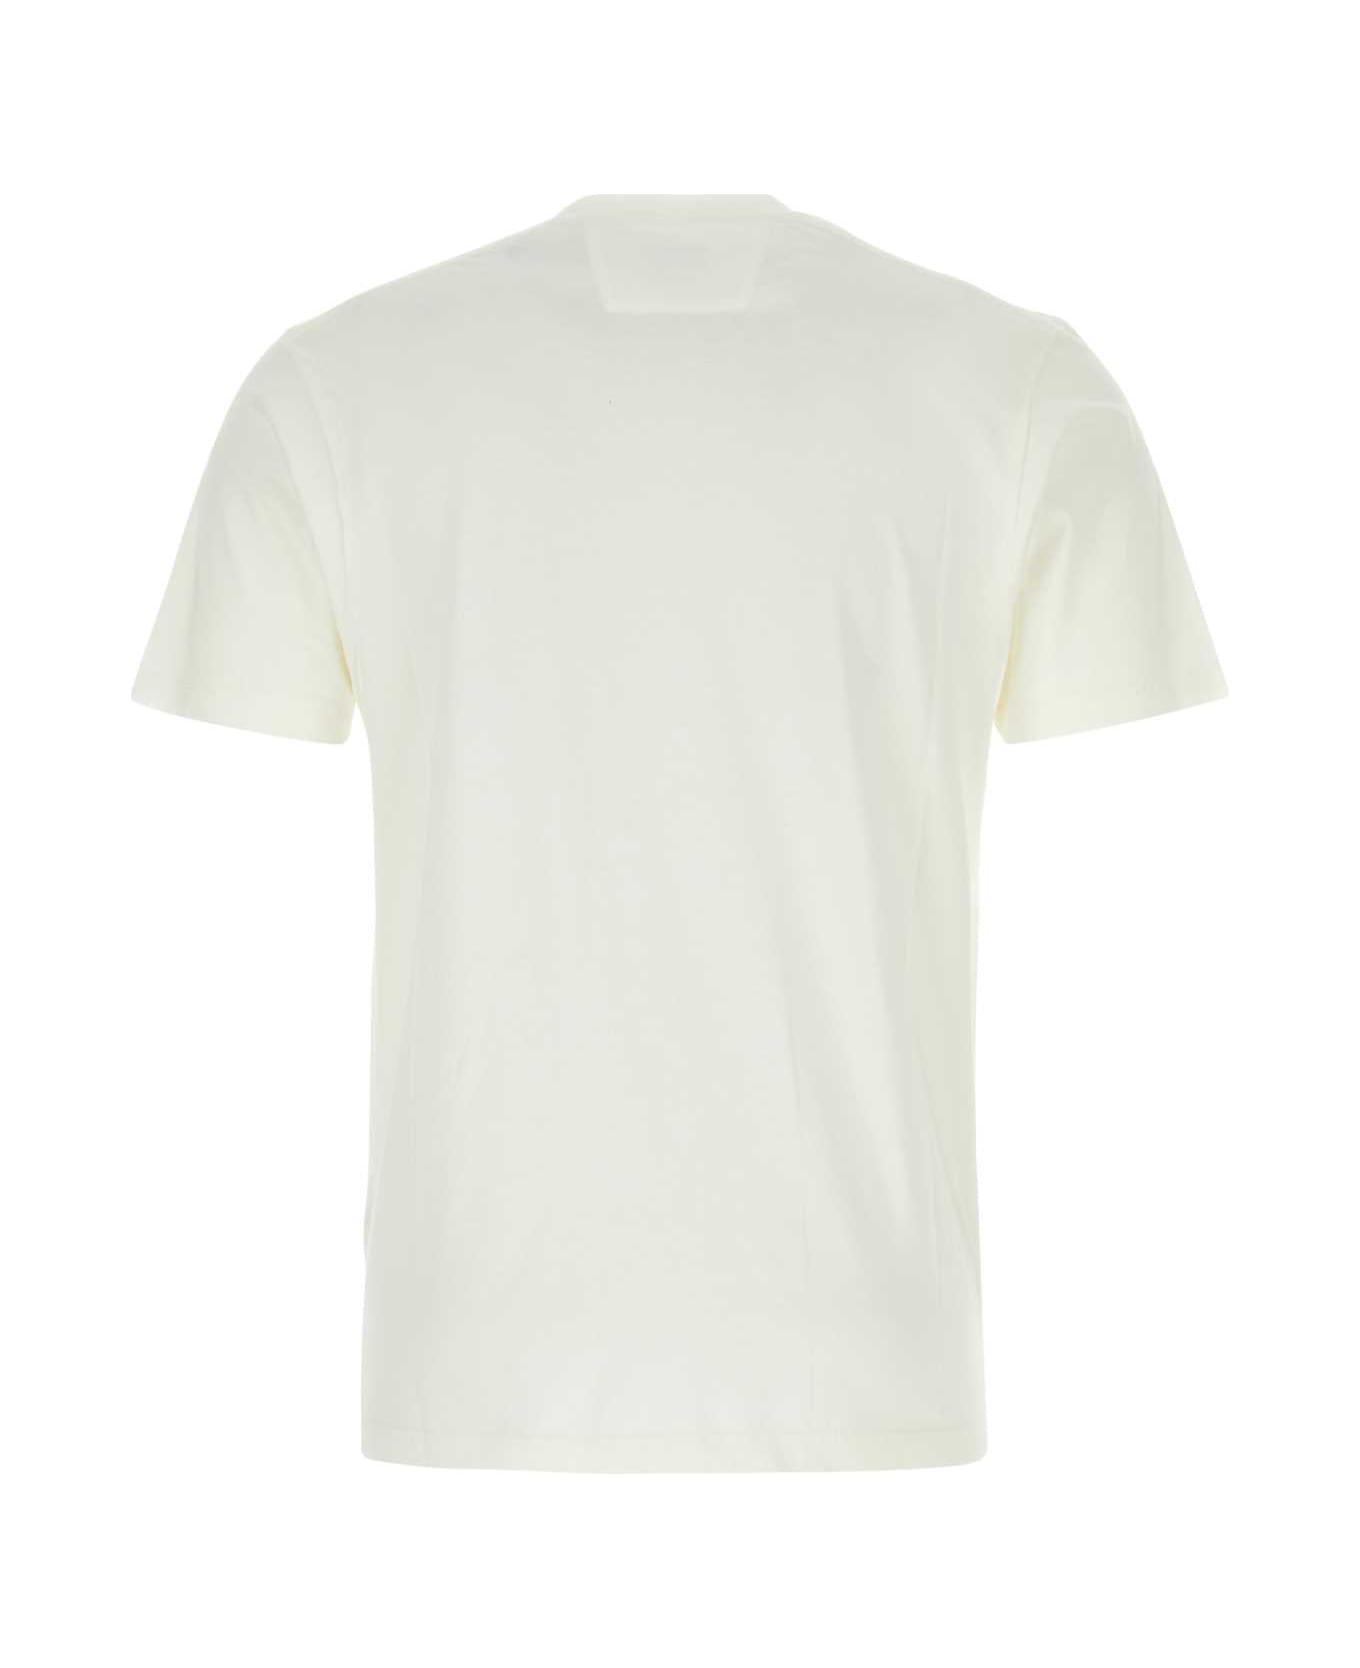 C.P. Company White Cotton T-shirt - GAUZEWHITE